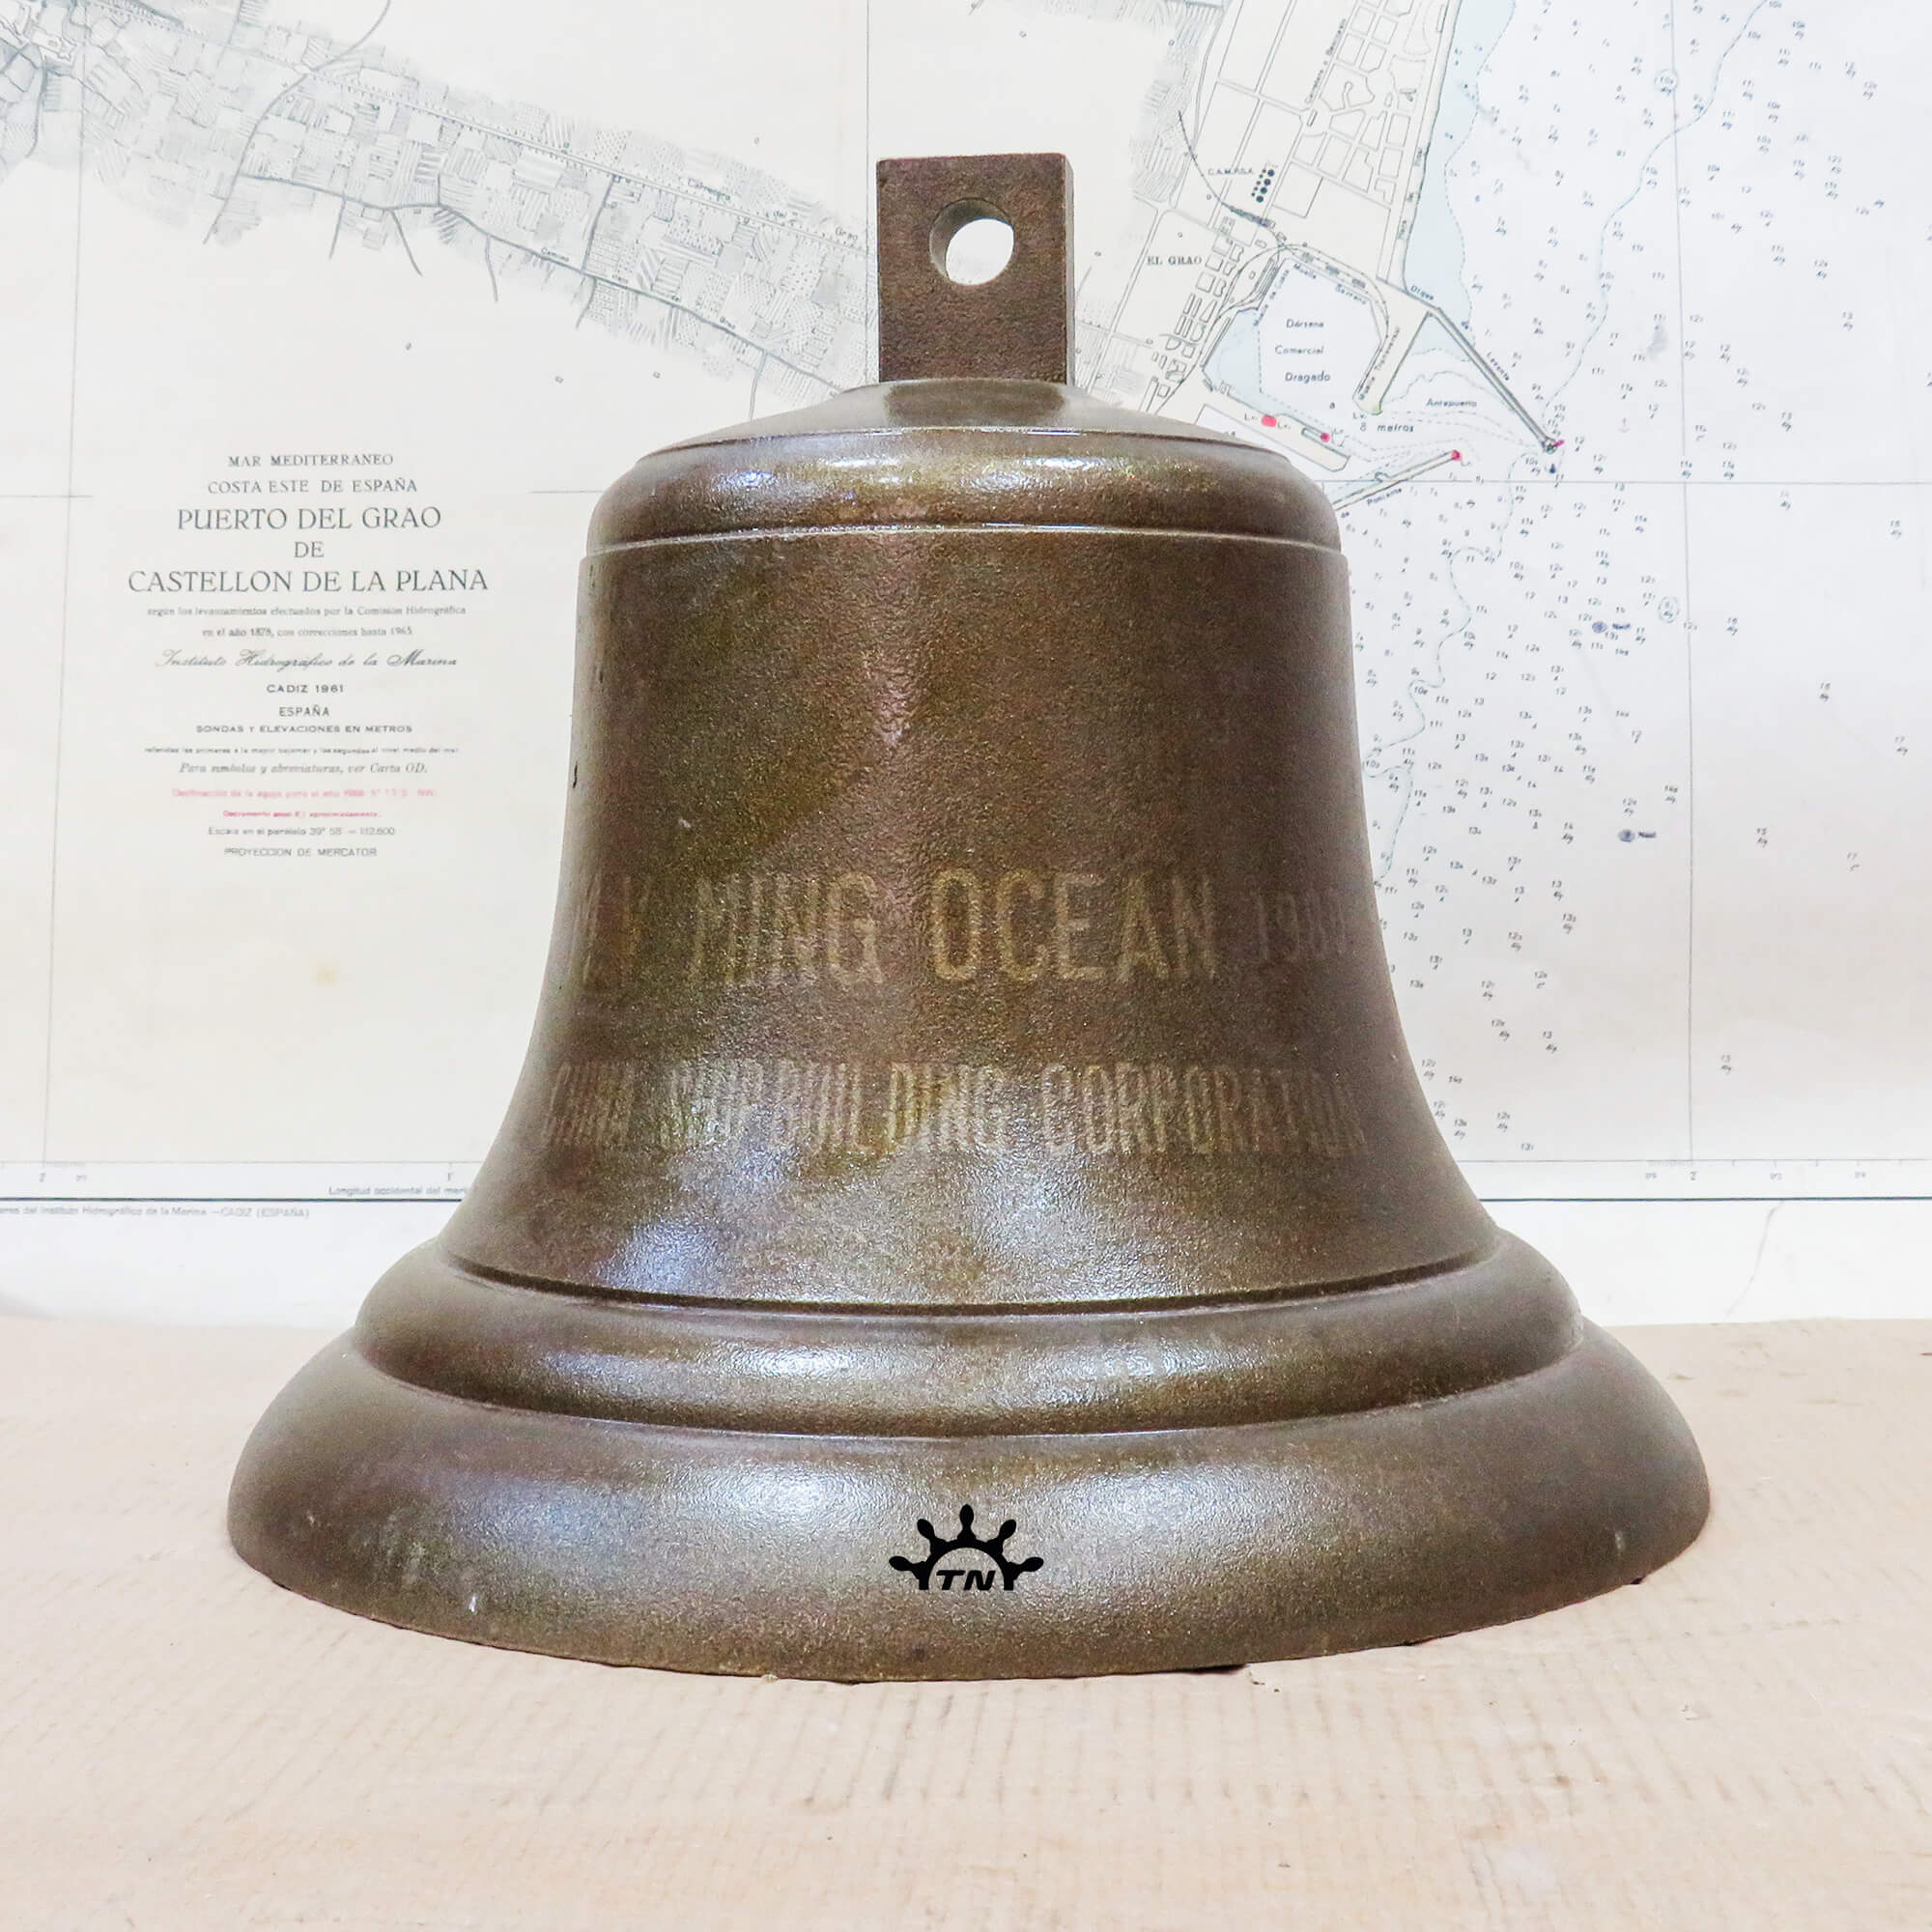 Boat bell M.V. Ming Ocean 1980 30x30cm. used bronze - Talleres Nasio